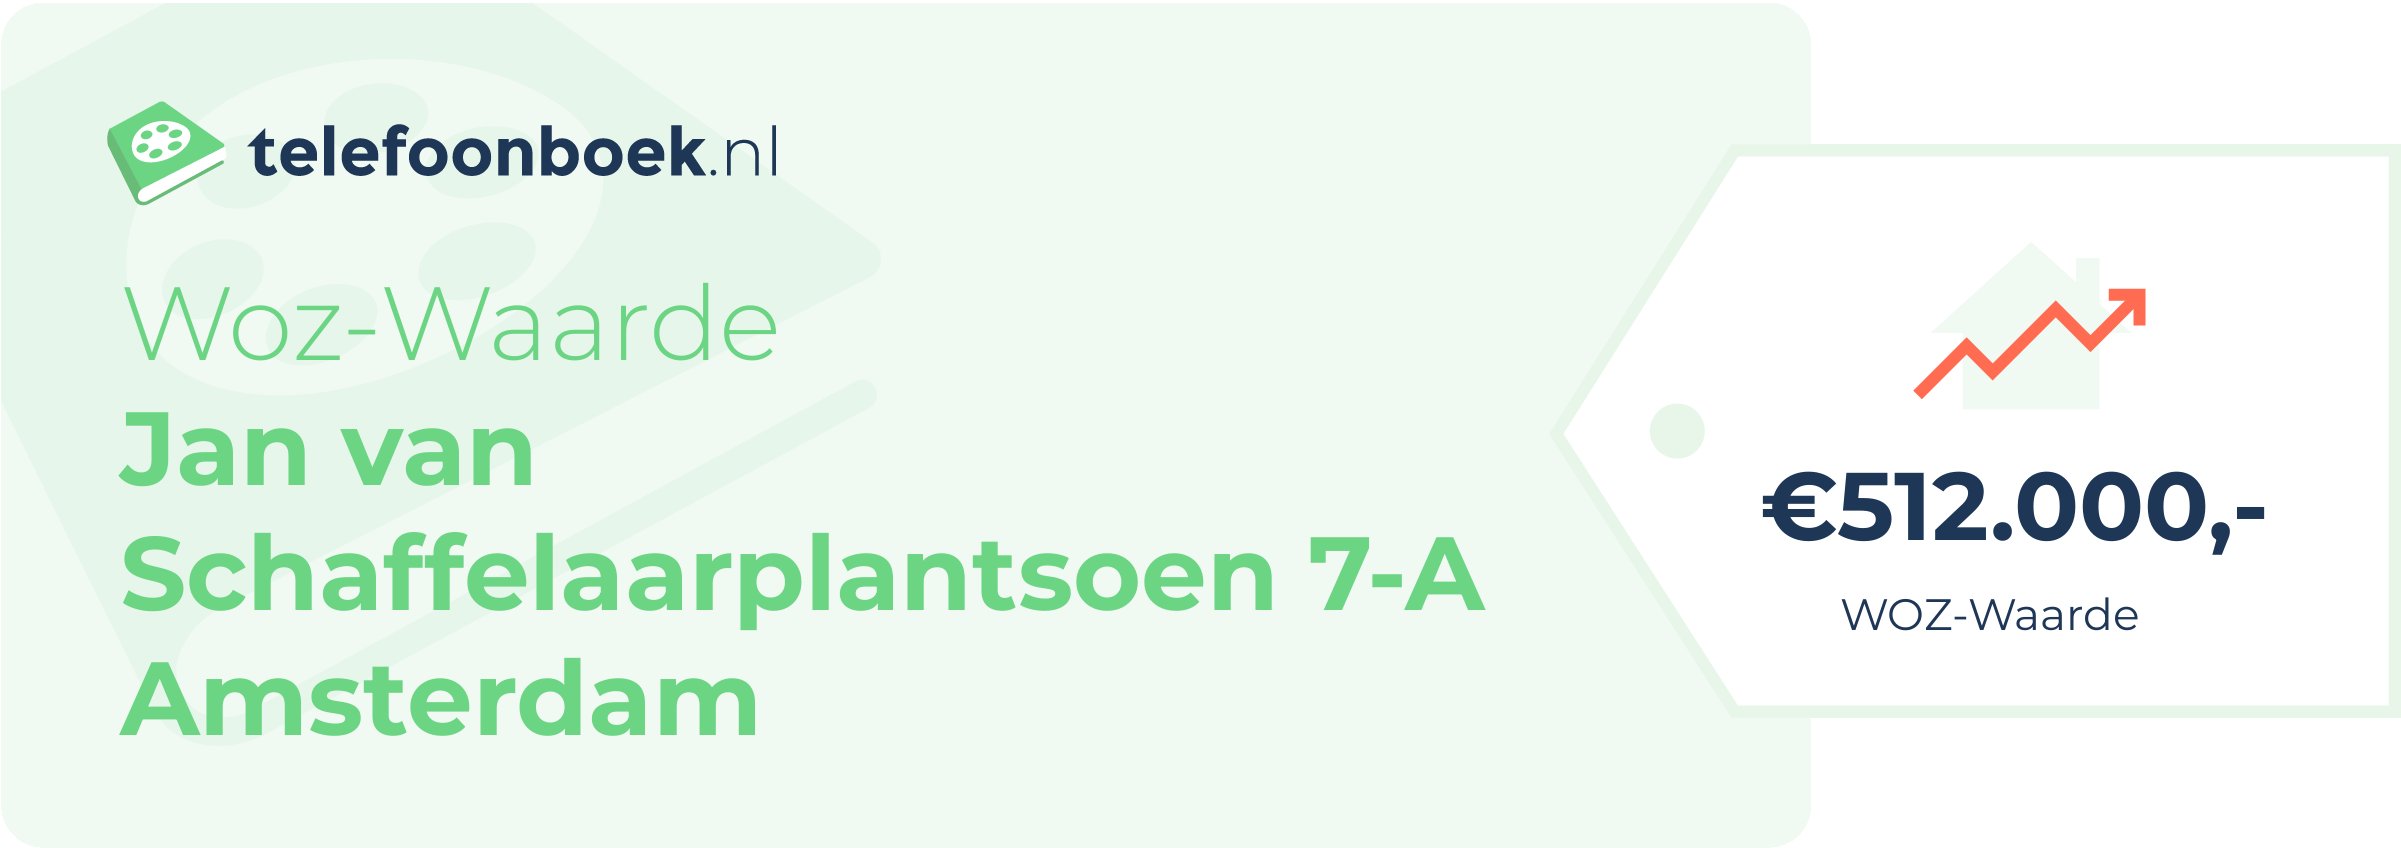 WOZ-waarde Jan Van Schaffelaarplantsoen 7-A Amsterdam